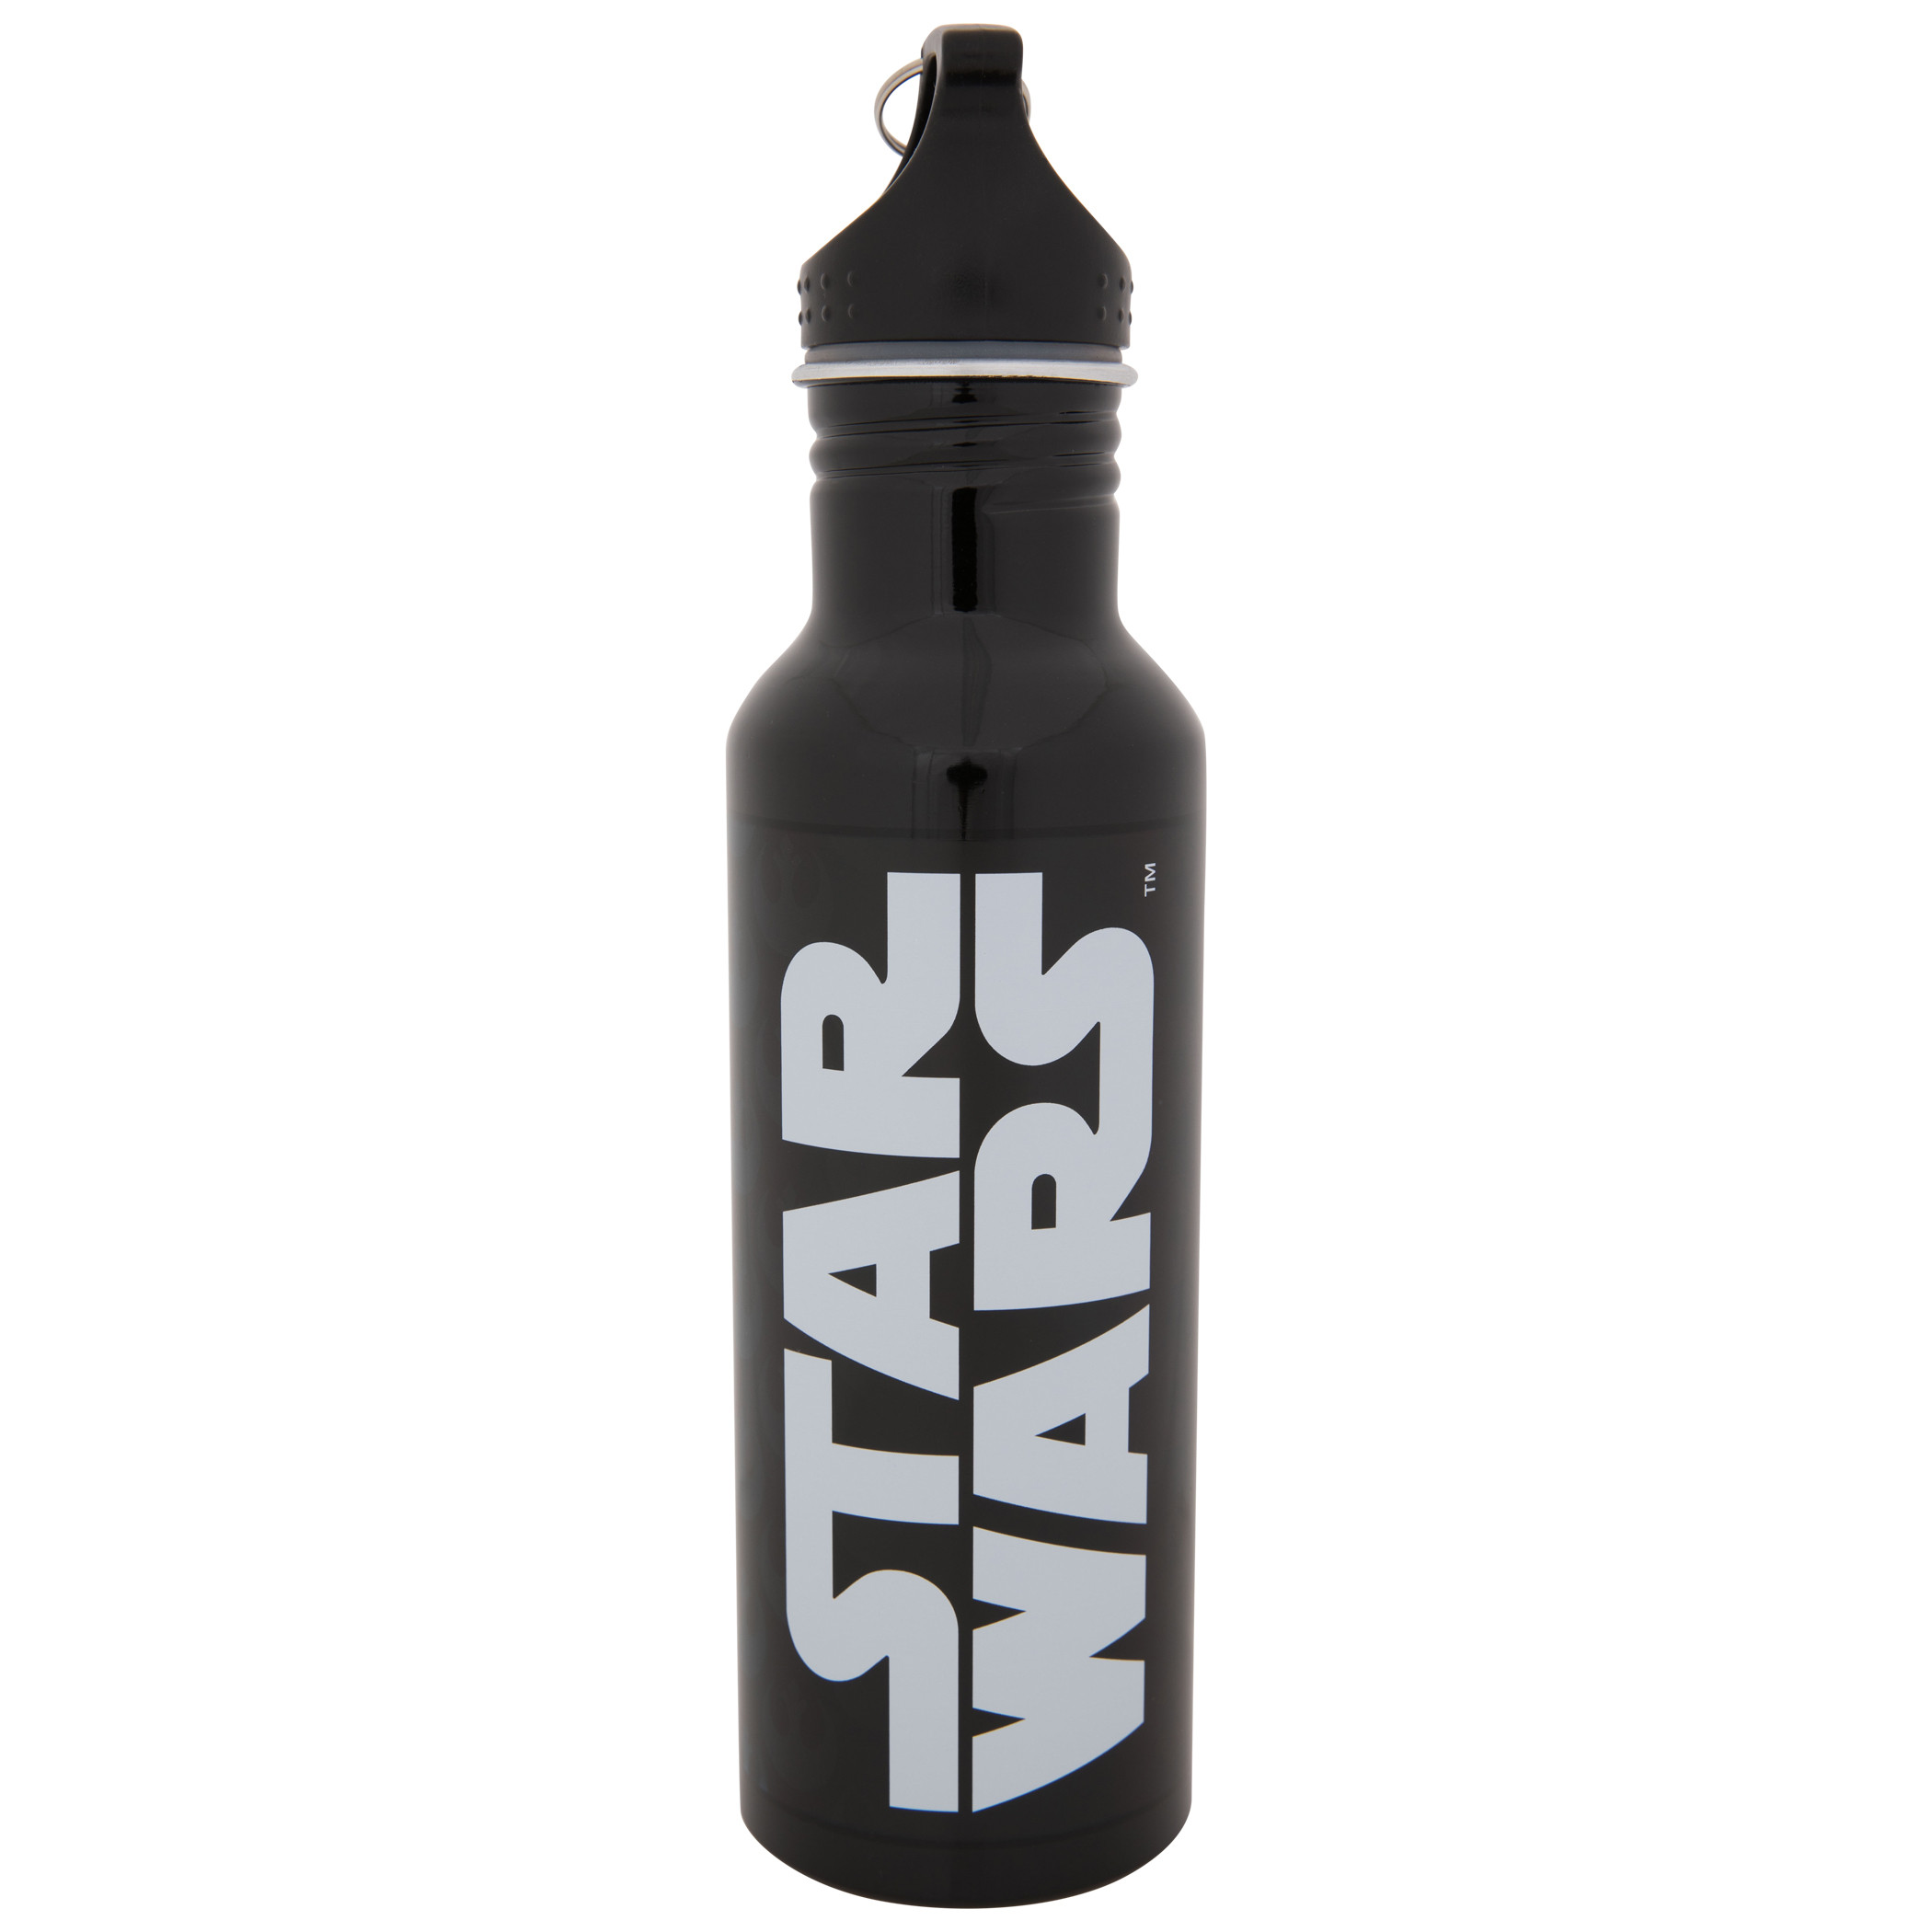 Star Wars Empire Vs Rebels Aluminum Screw Cap Water Bottle